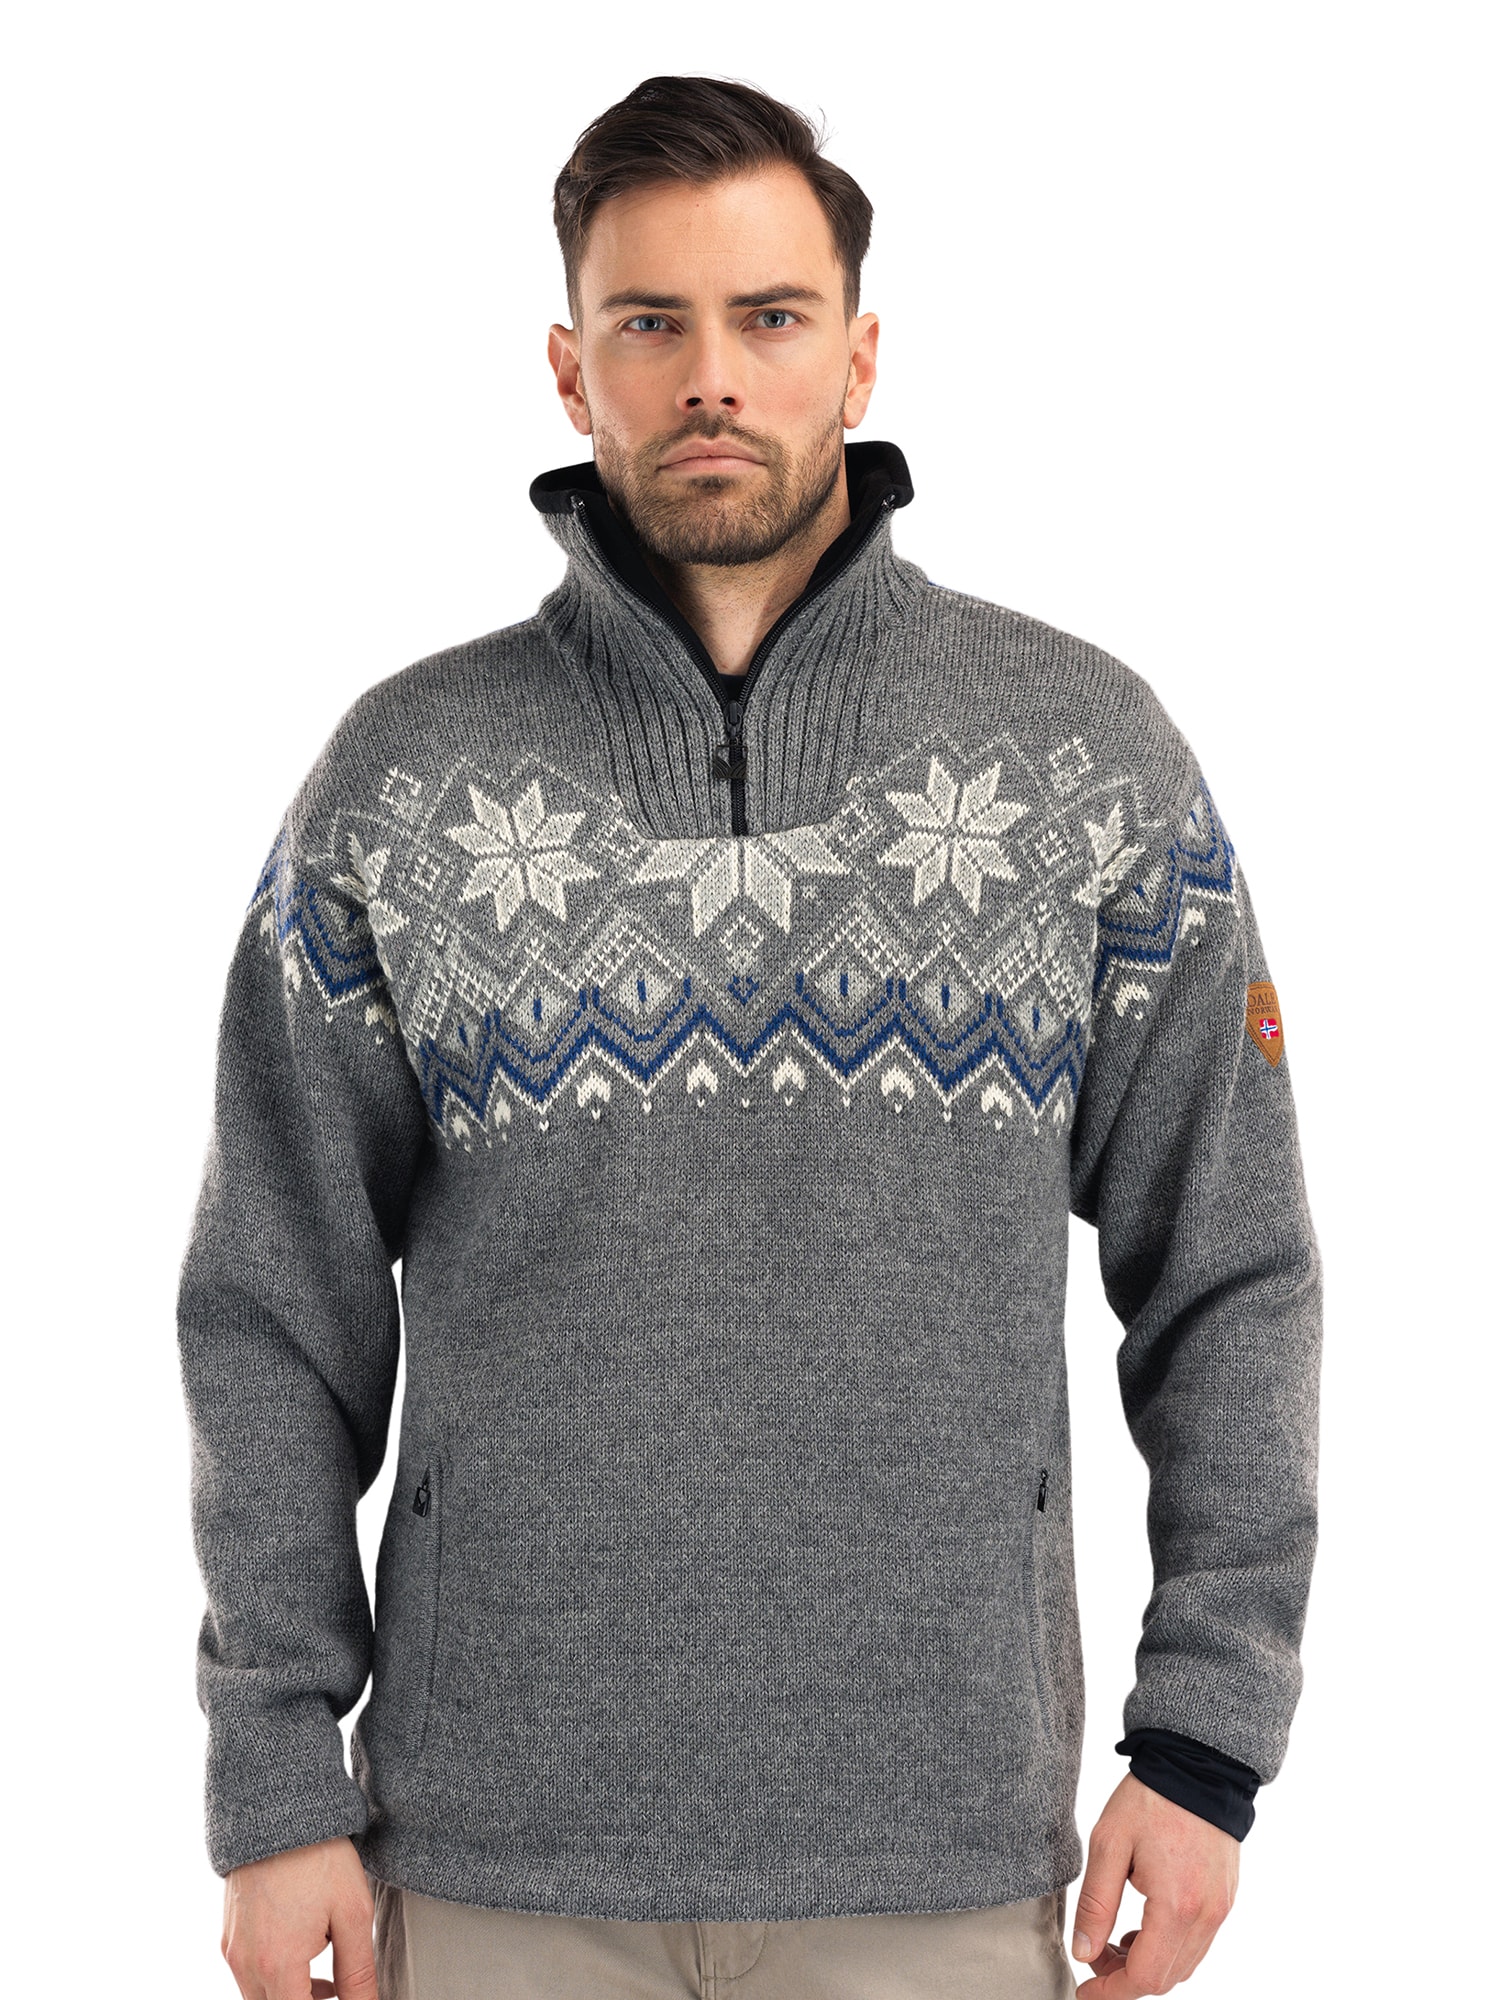 Fongen Weatherproof Sweater - Men - Grey - Dale of Norway - Dale of Norway